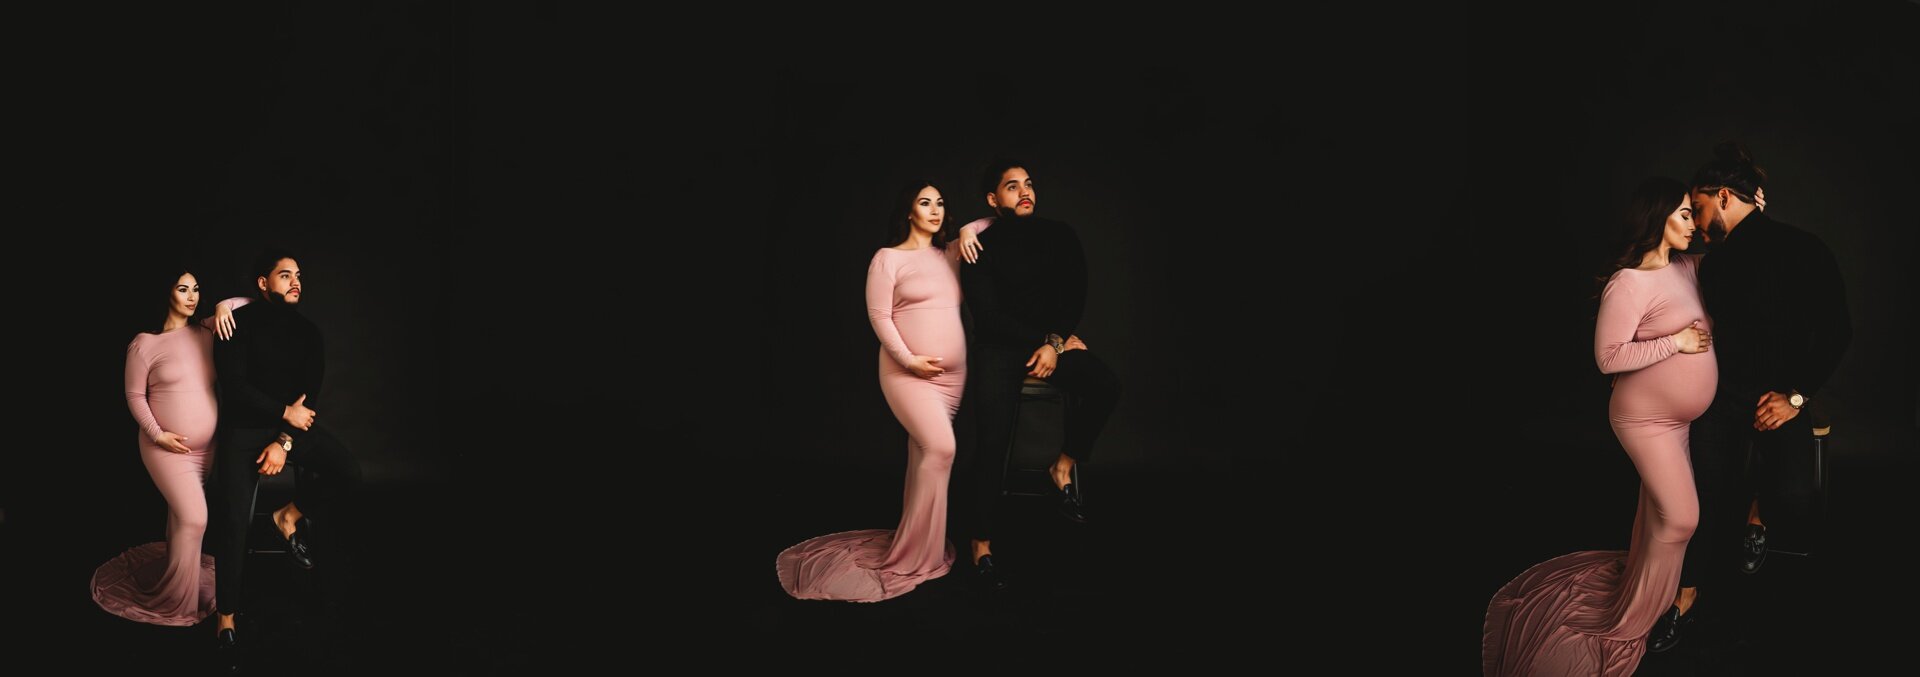 studio couples maternity photo shoot, st pete fl